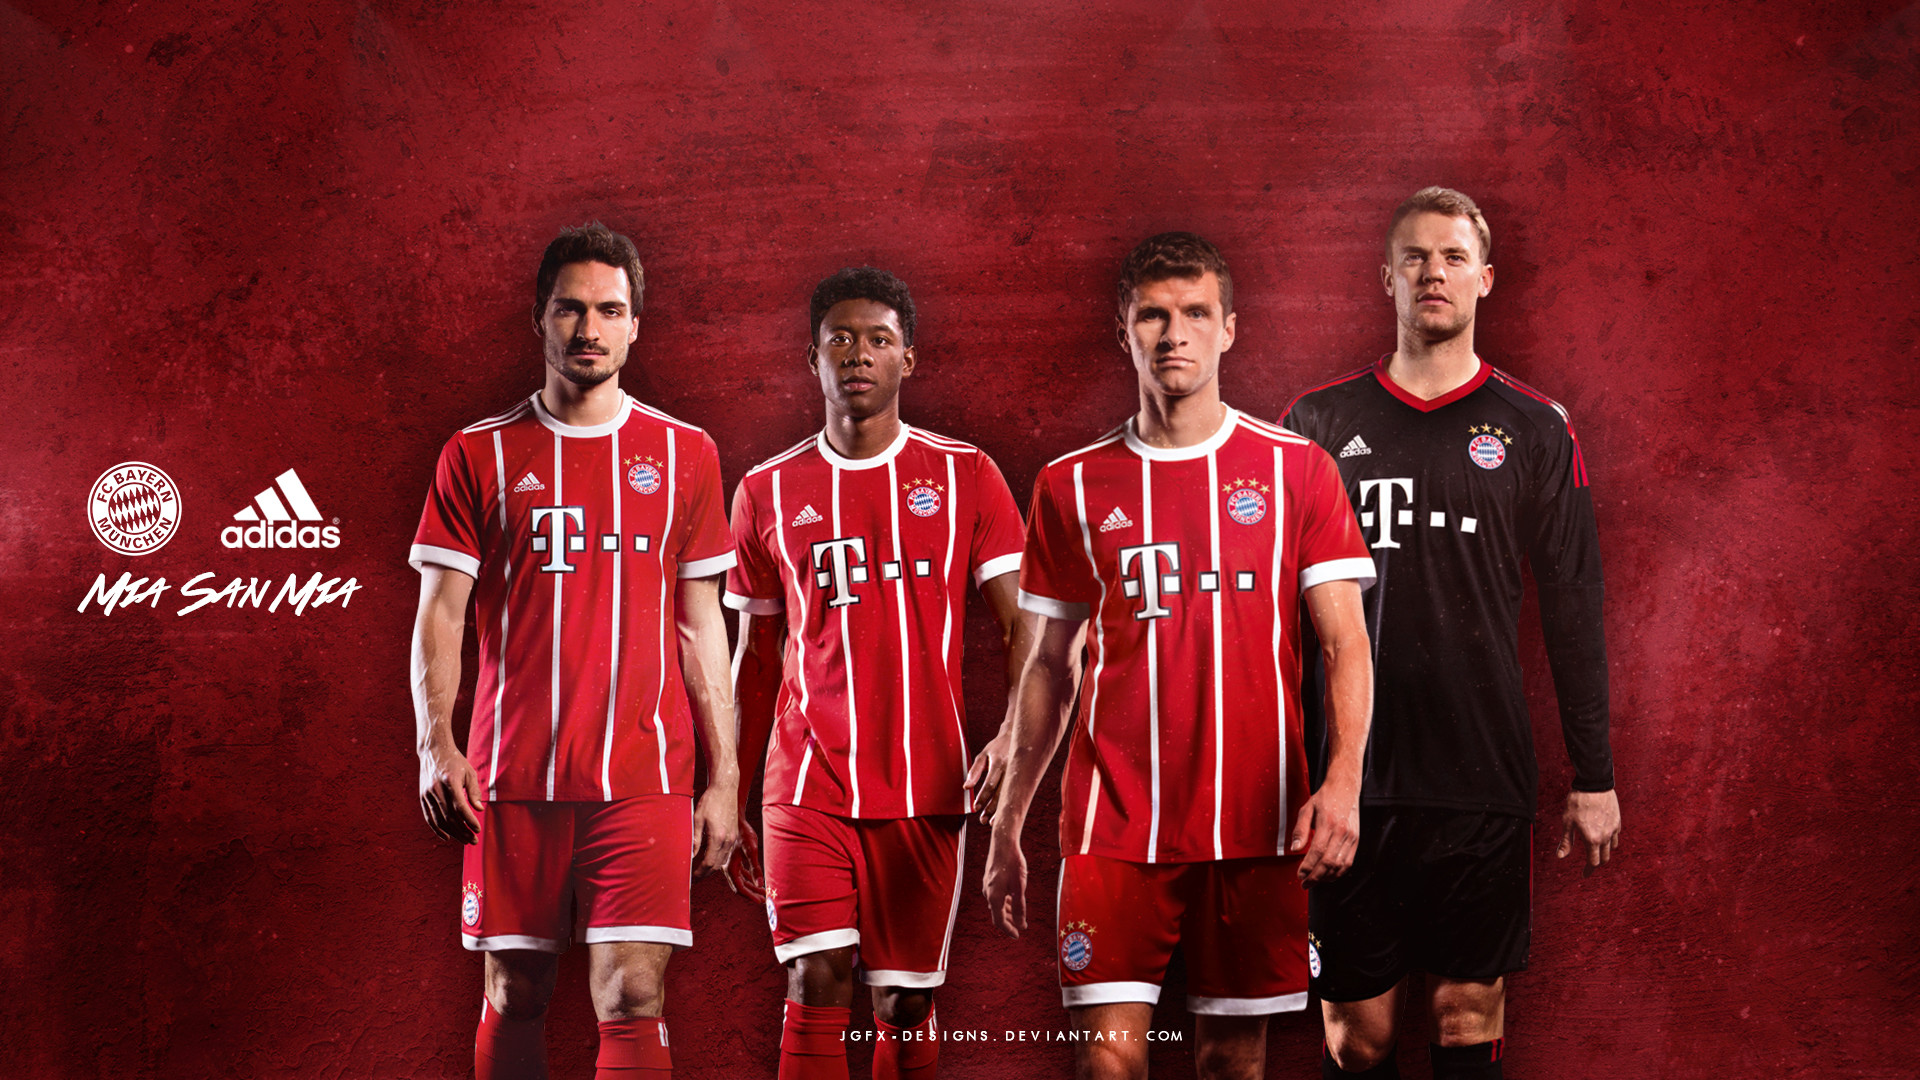 1920x1080 ... Bayern Munchen 2017-2018 adidas ad by jgfx-designs